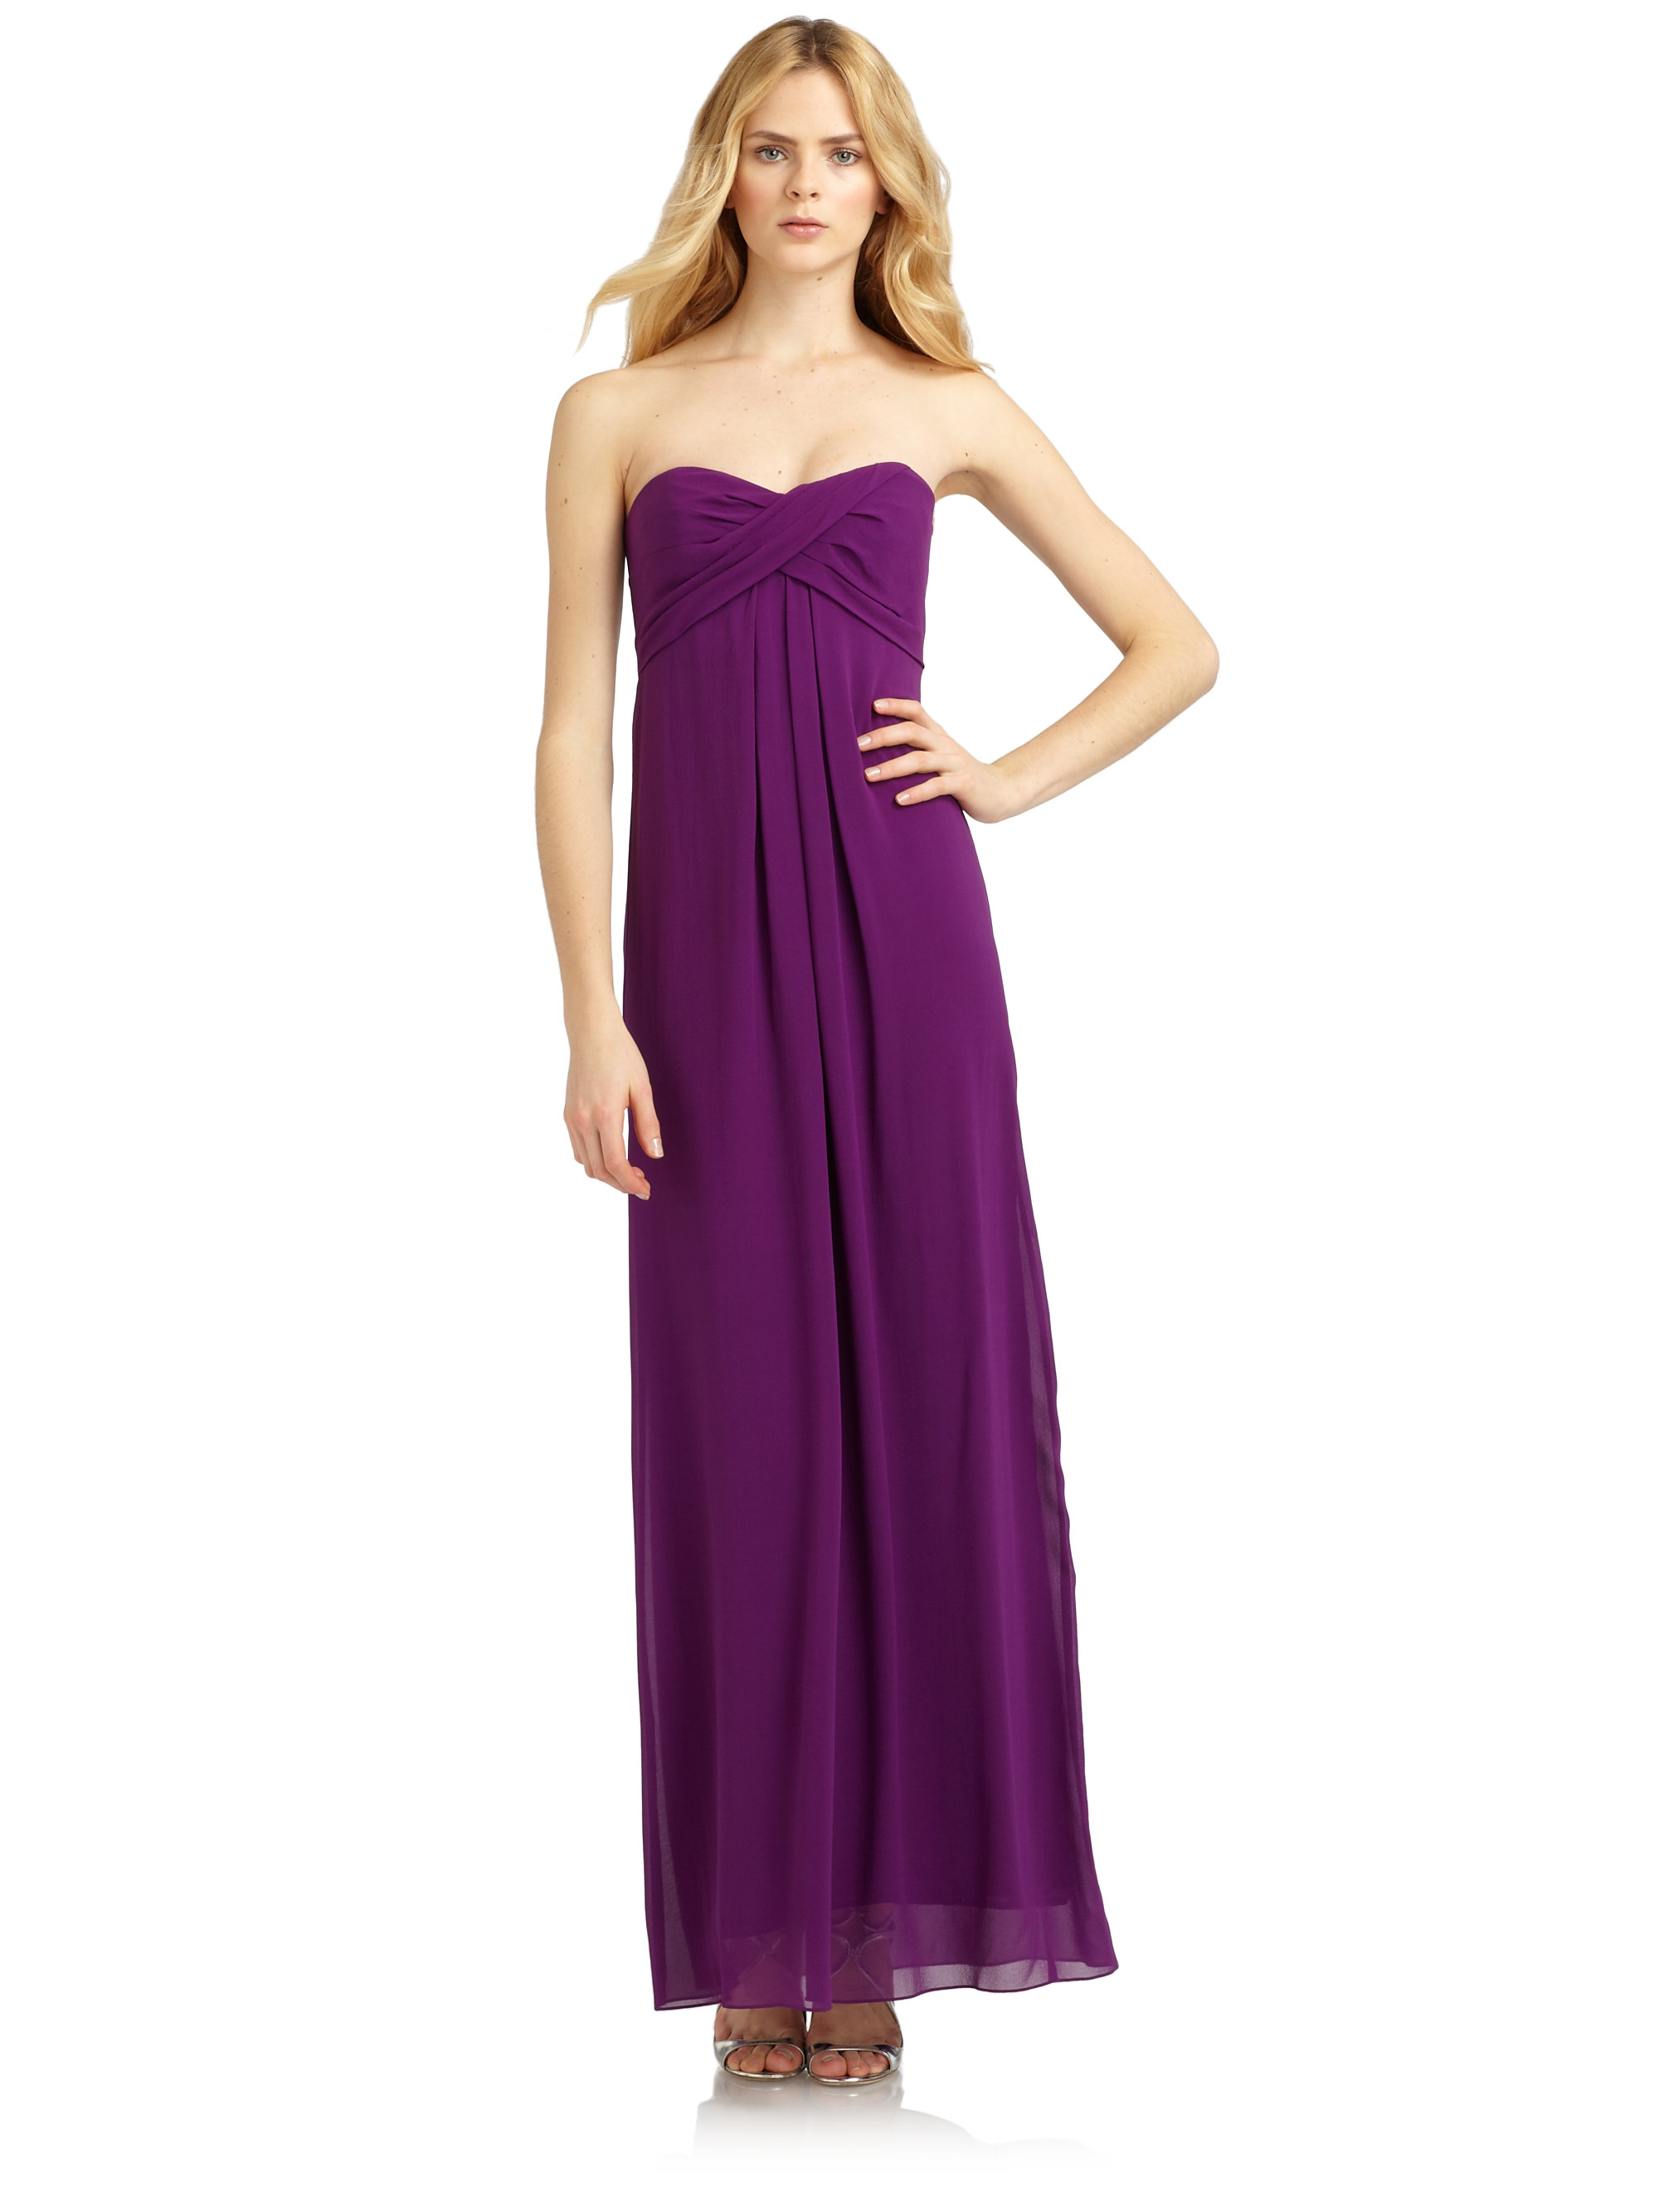 Nicole Miller Ruched Silk Chiffon Strapless Gown in Purple - Lyst